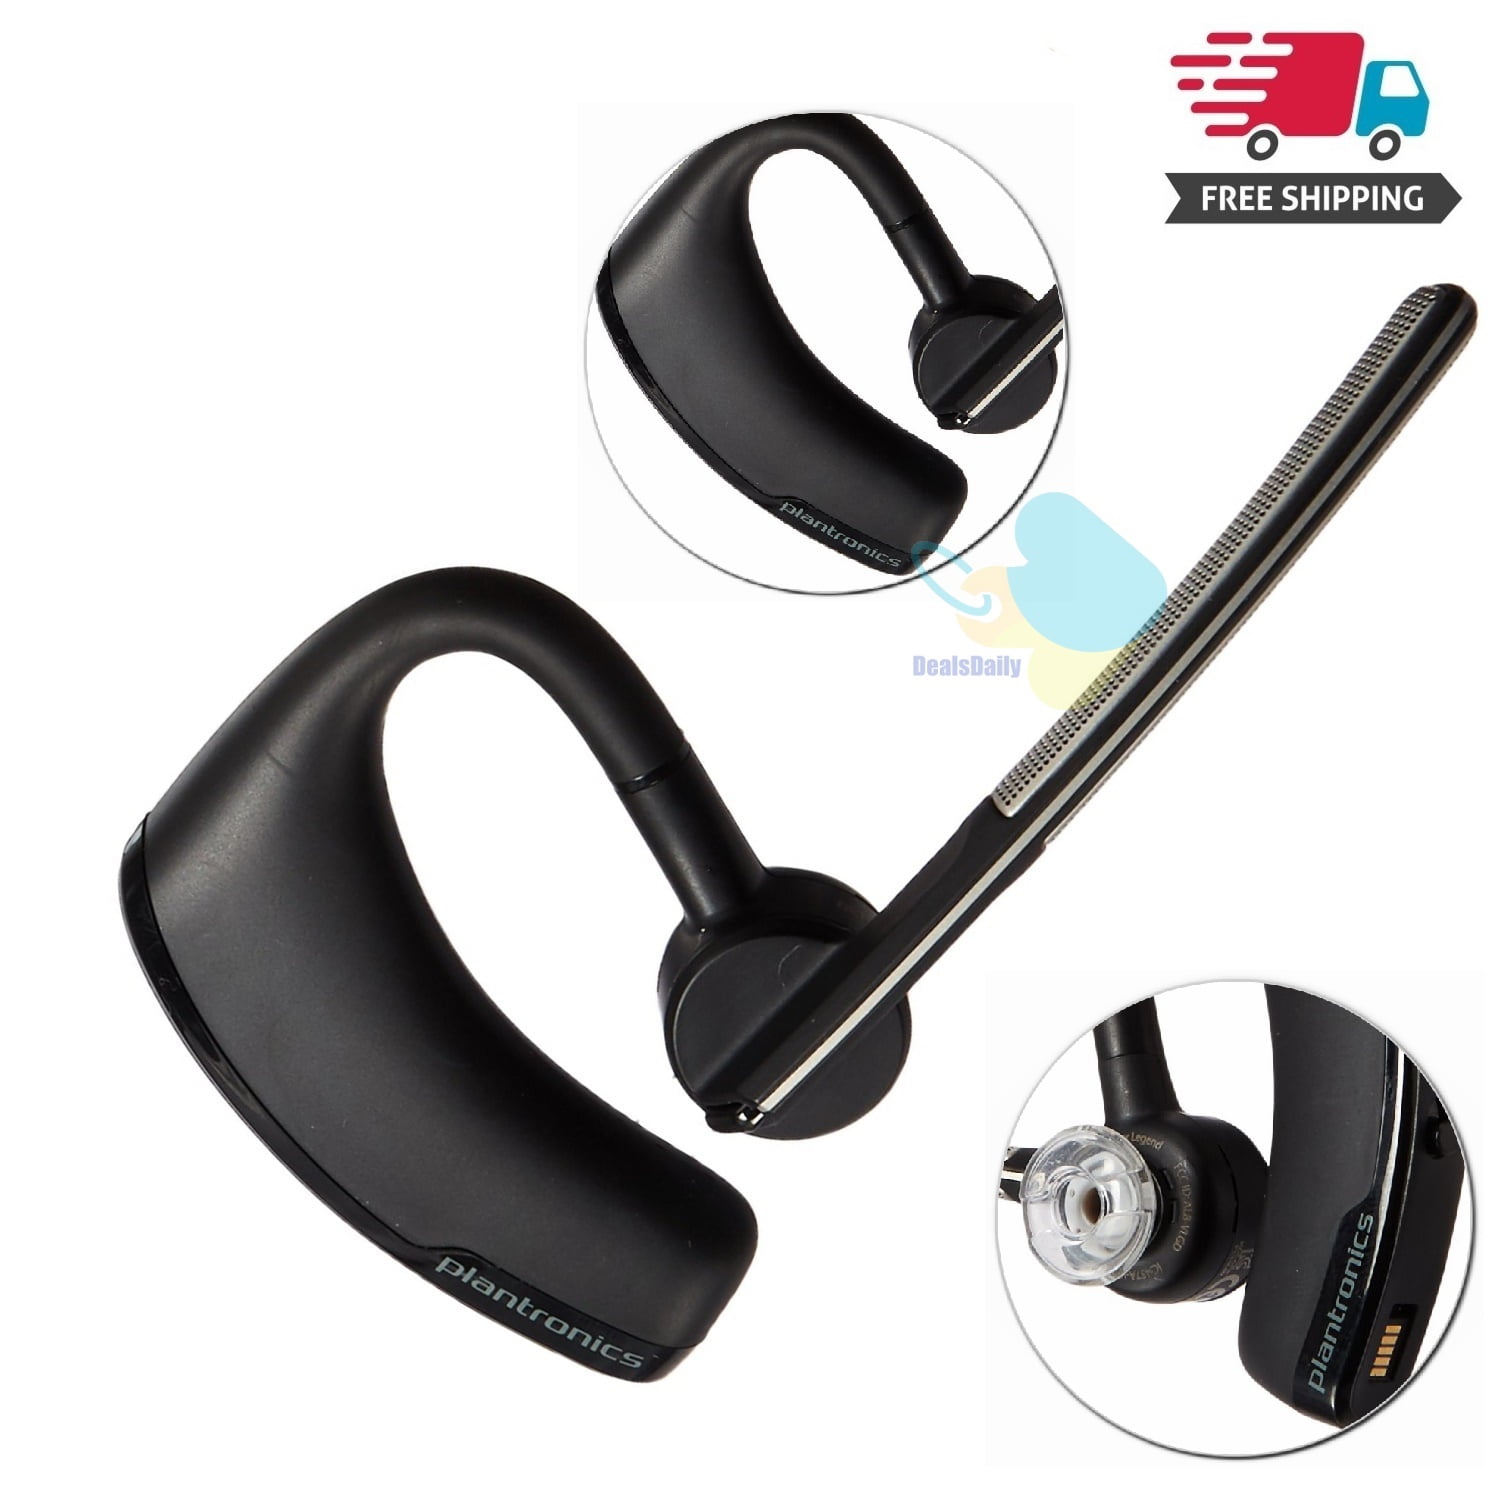 Plantronics Voyager Legend UC B235-M Bluetooth Headset - Retail Packaging -